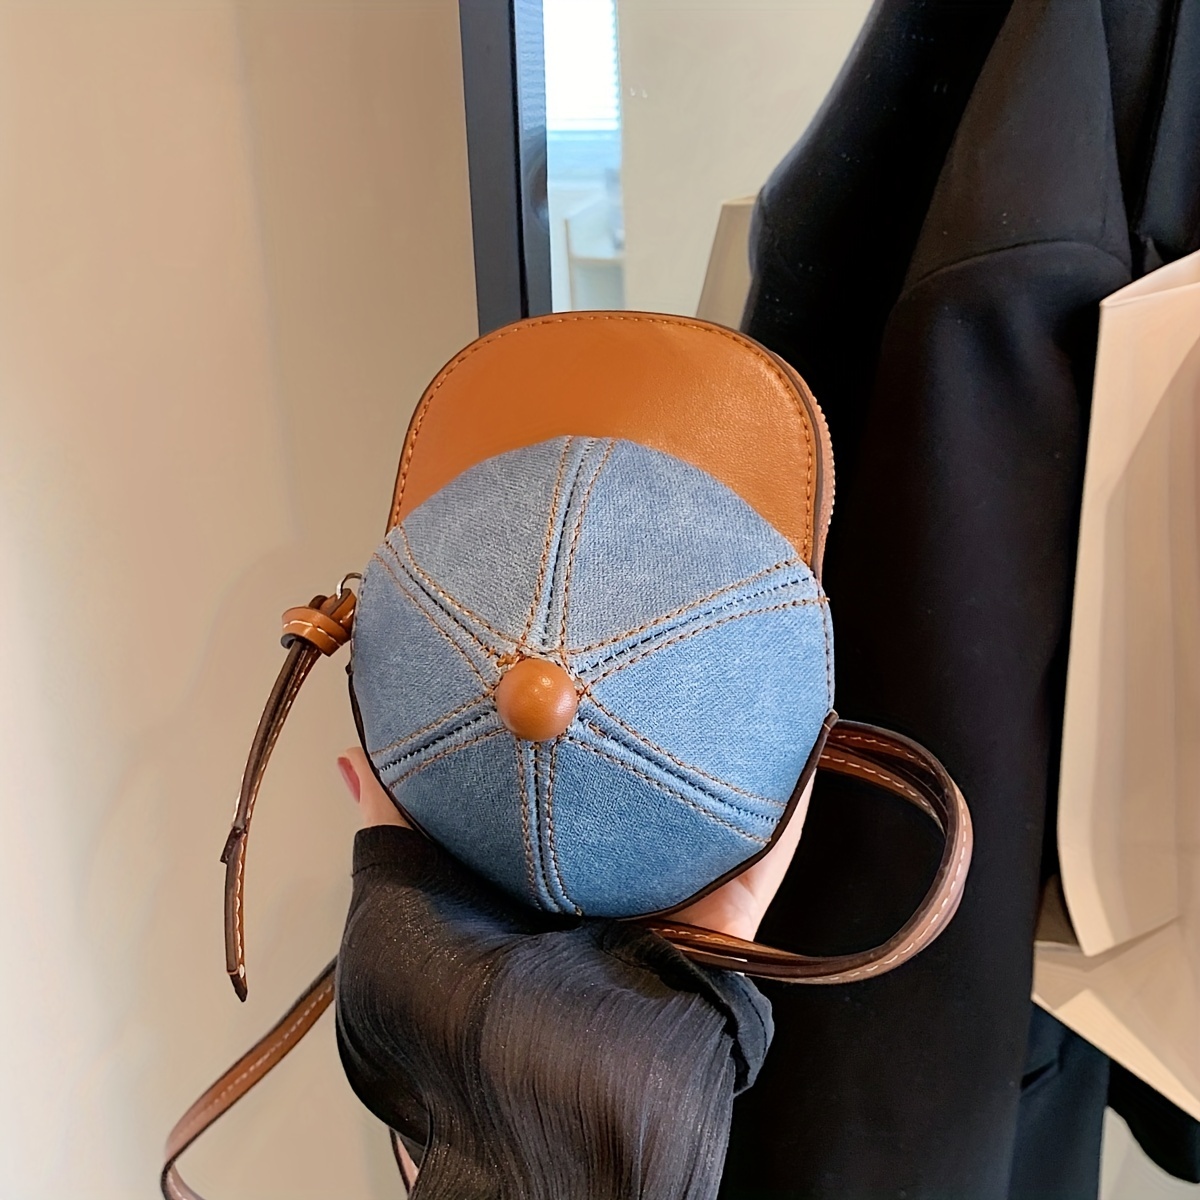 Midi cap leather bag - JW Anderson - Women